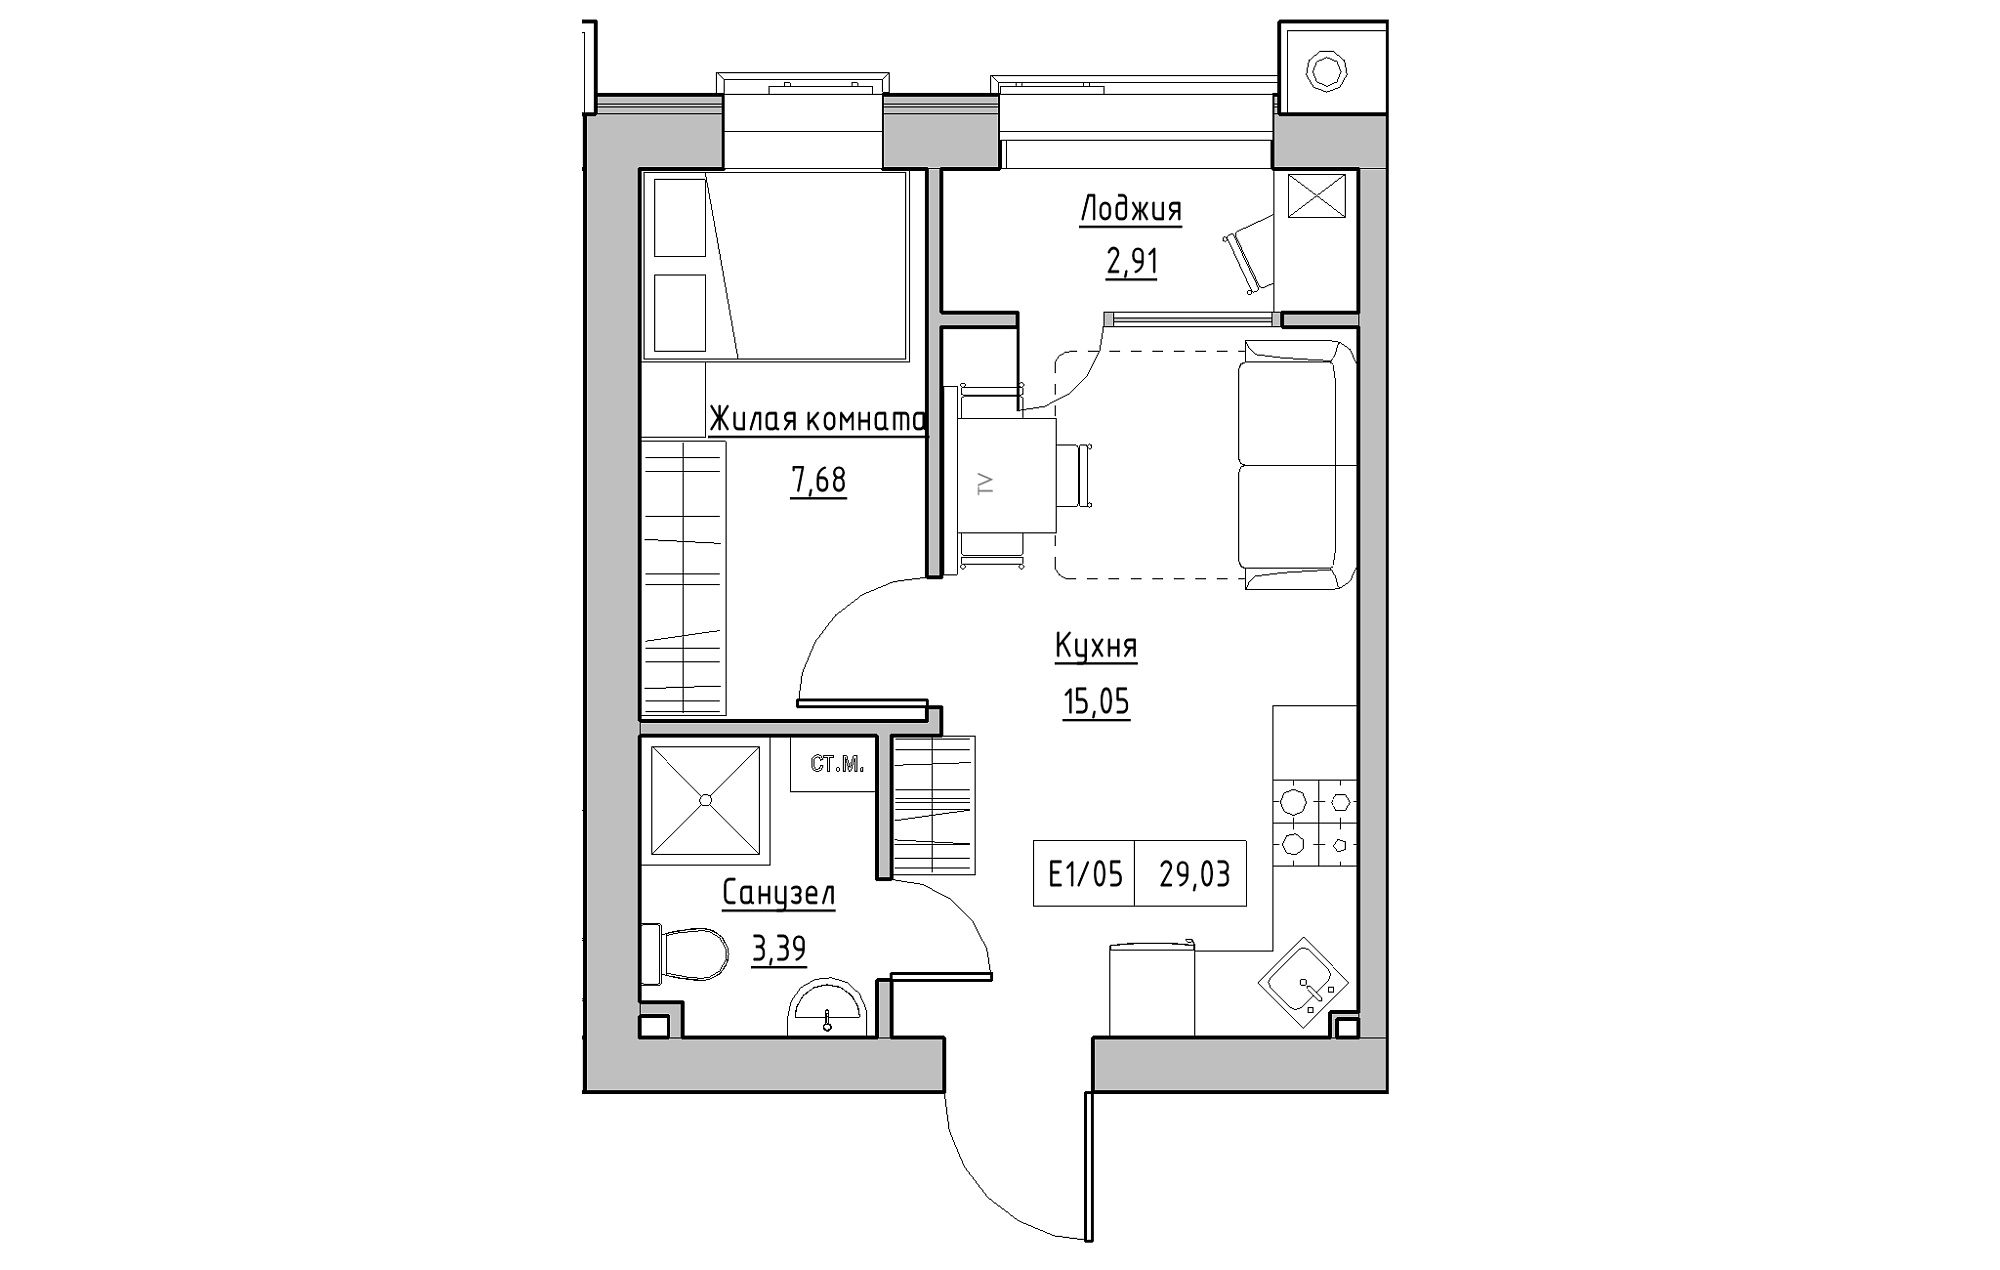 Planning 1-rm flats area 29.03m2, KS-013-02/0007.